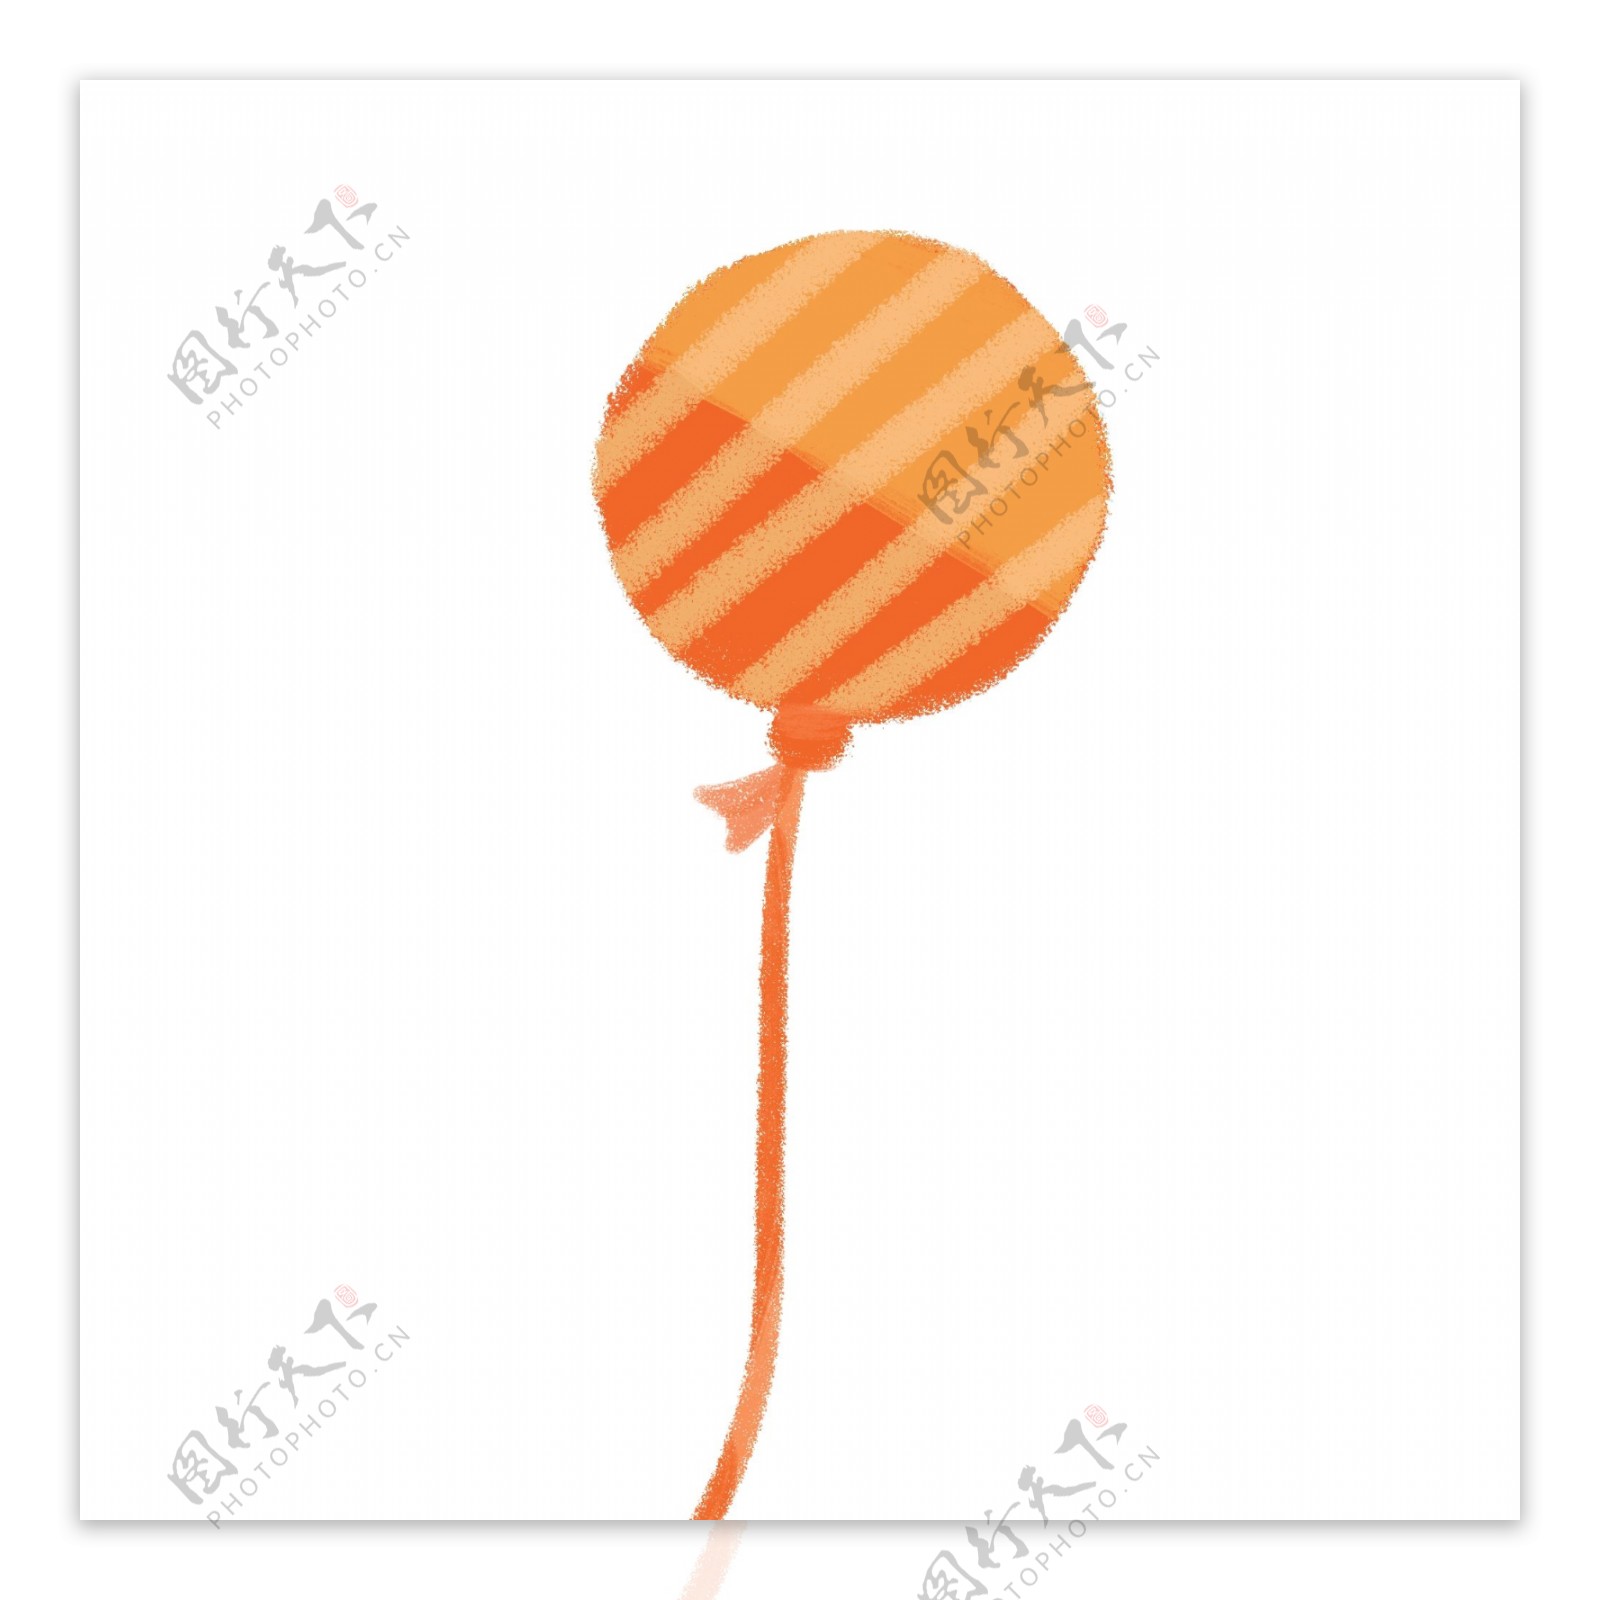 橘色条纹气球